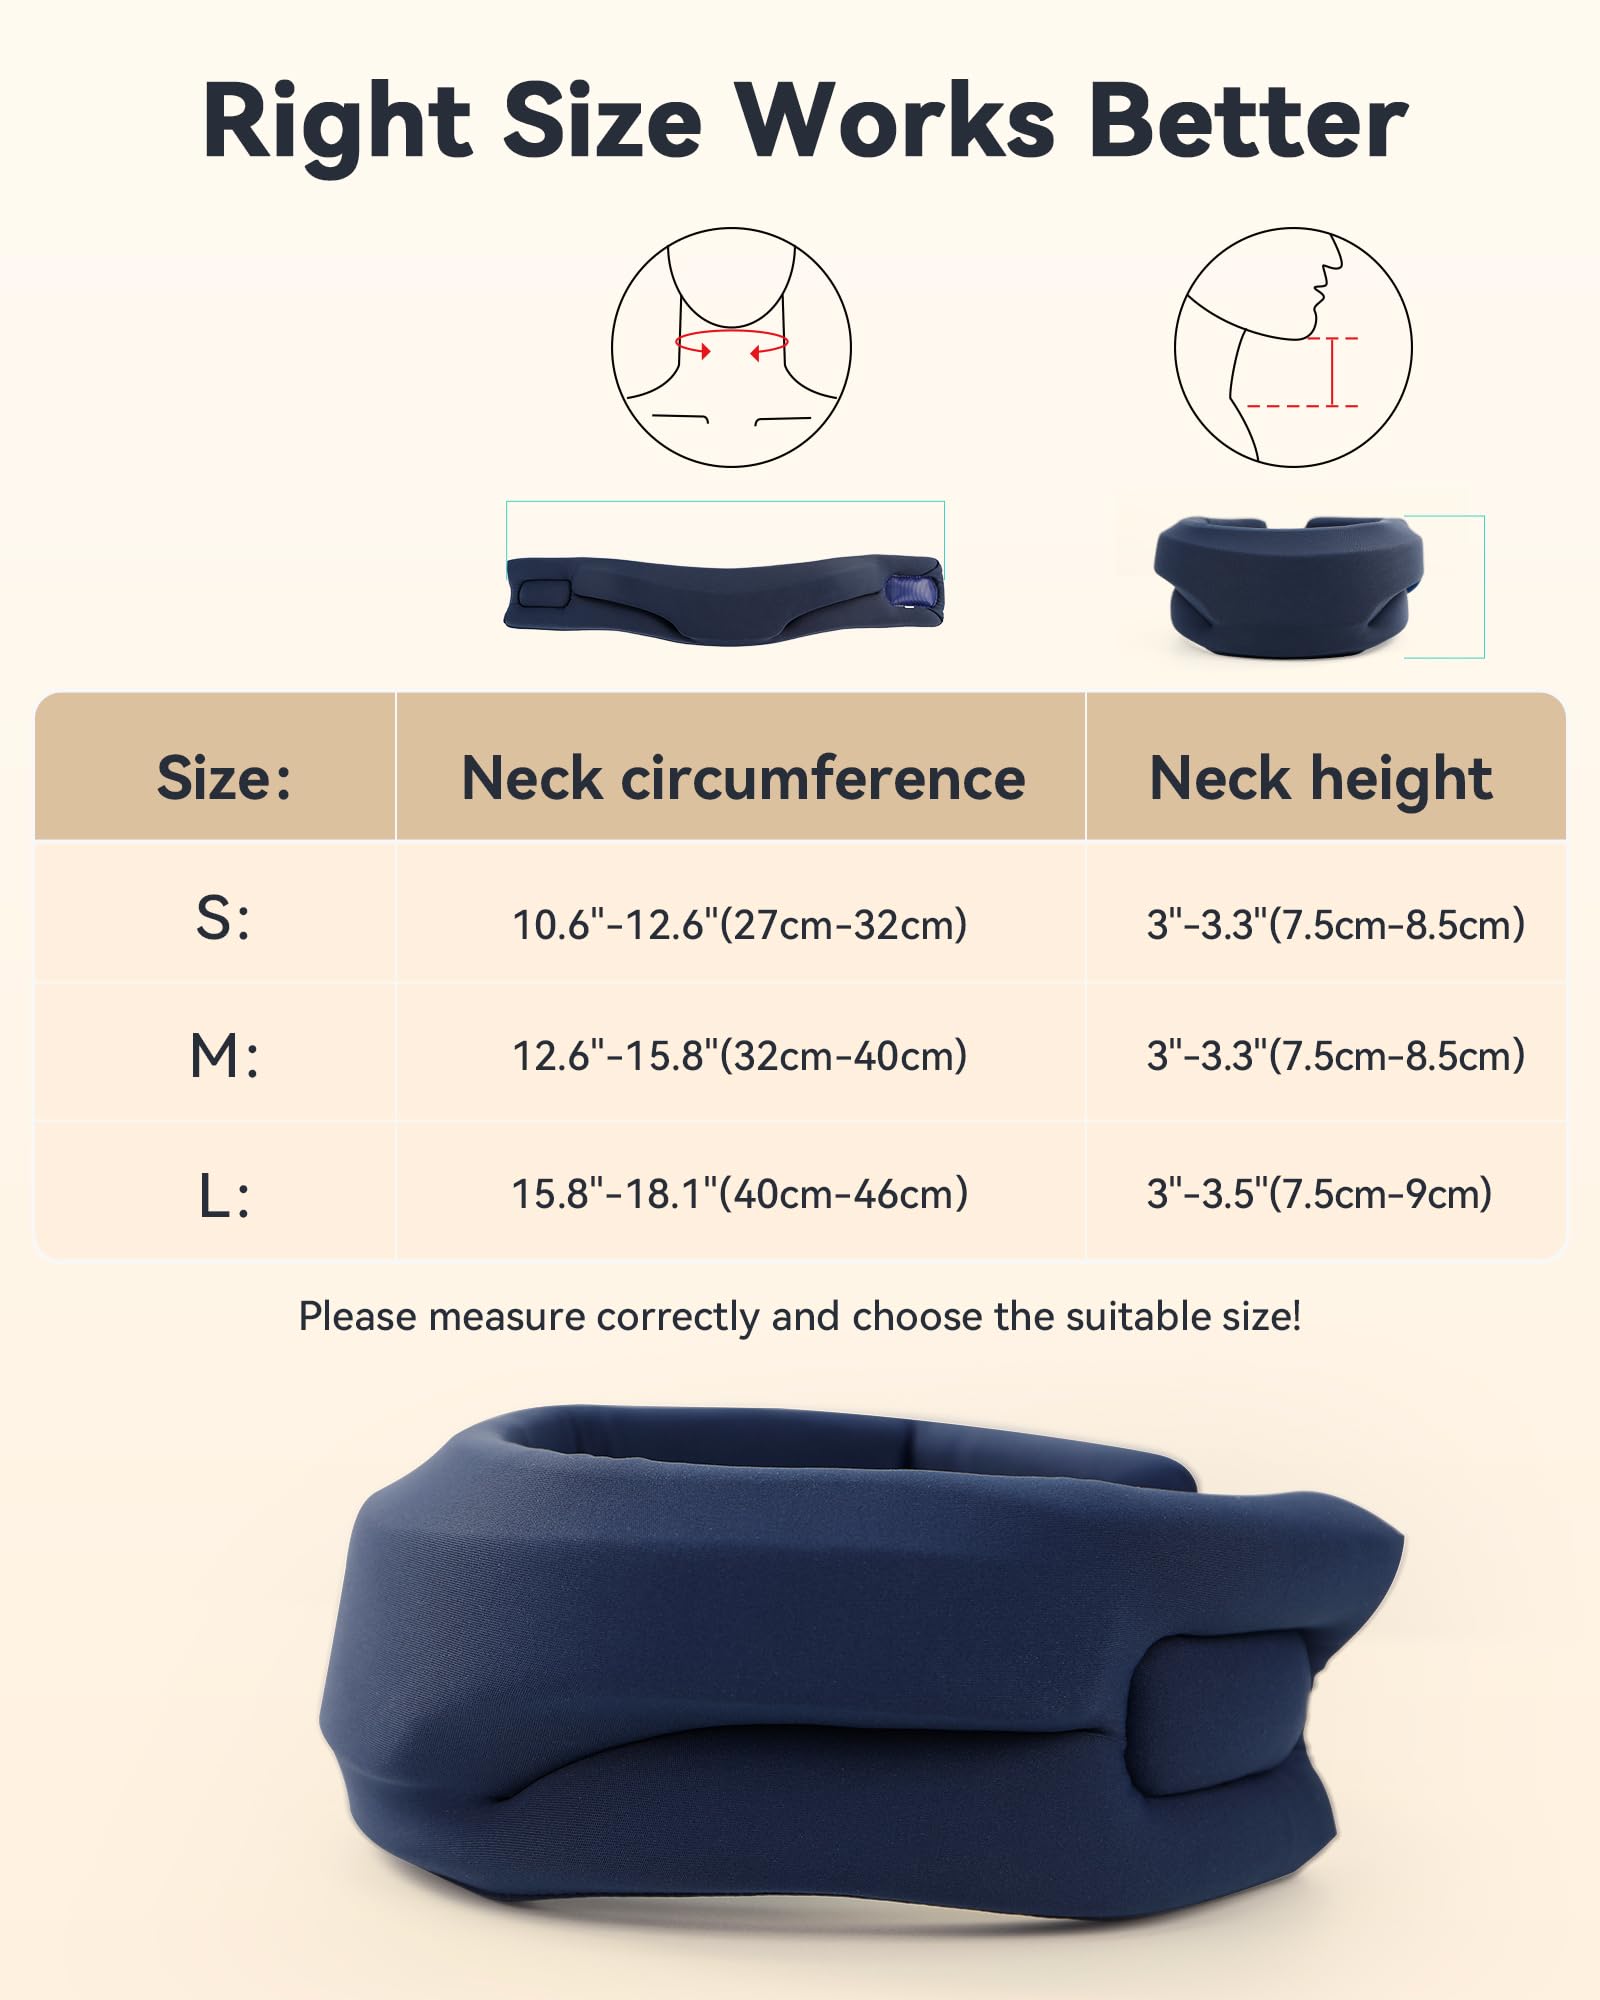 Neck Brace Cervical Collar - Neck Support Brace for Sleeping, Soft Foam Wraps Keep Vertebrae Stable and Aligned for Relief of Cervical Spine Pressure for Women & Men